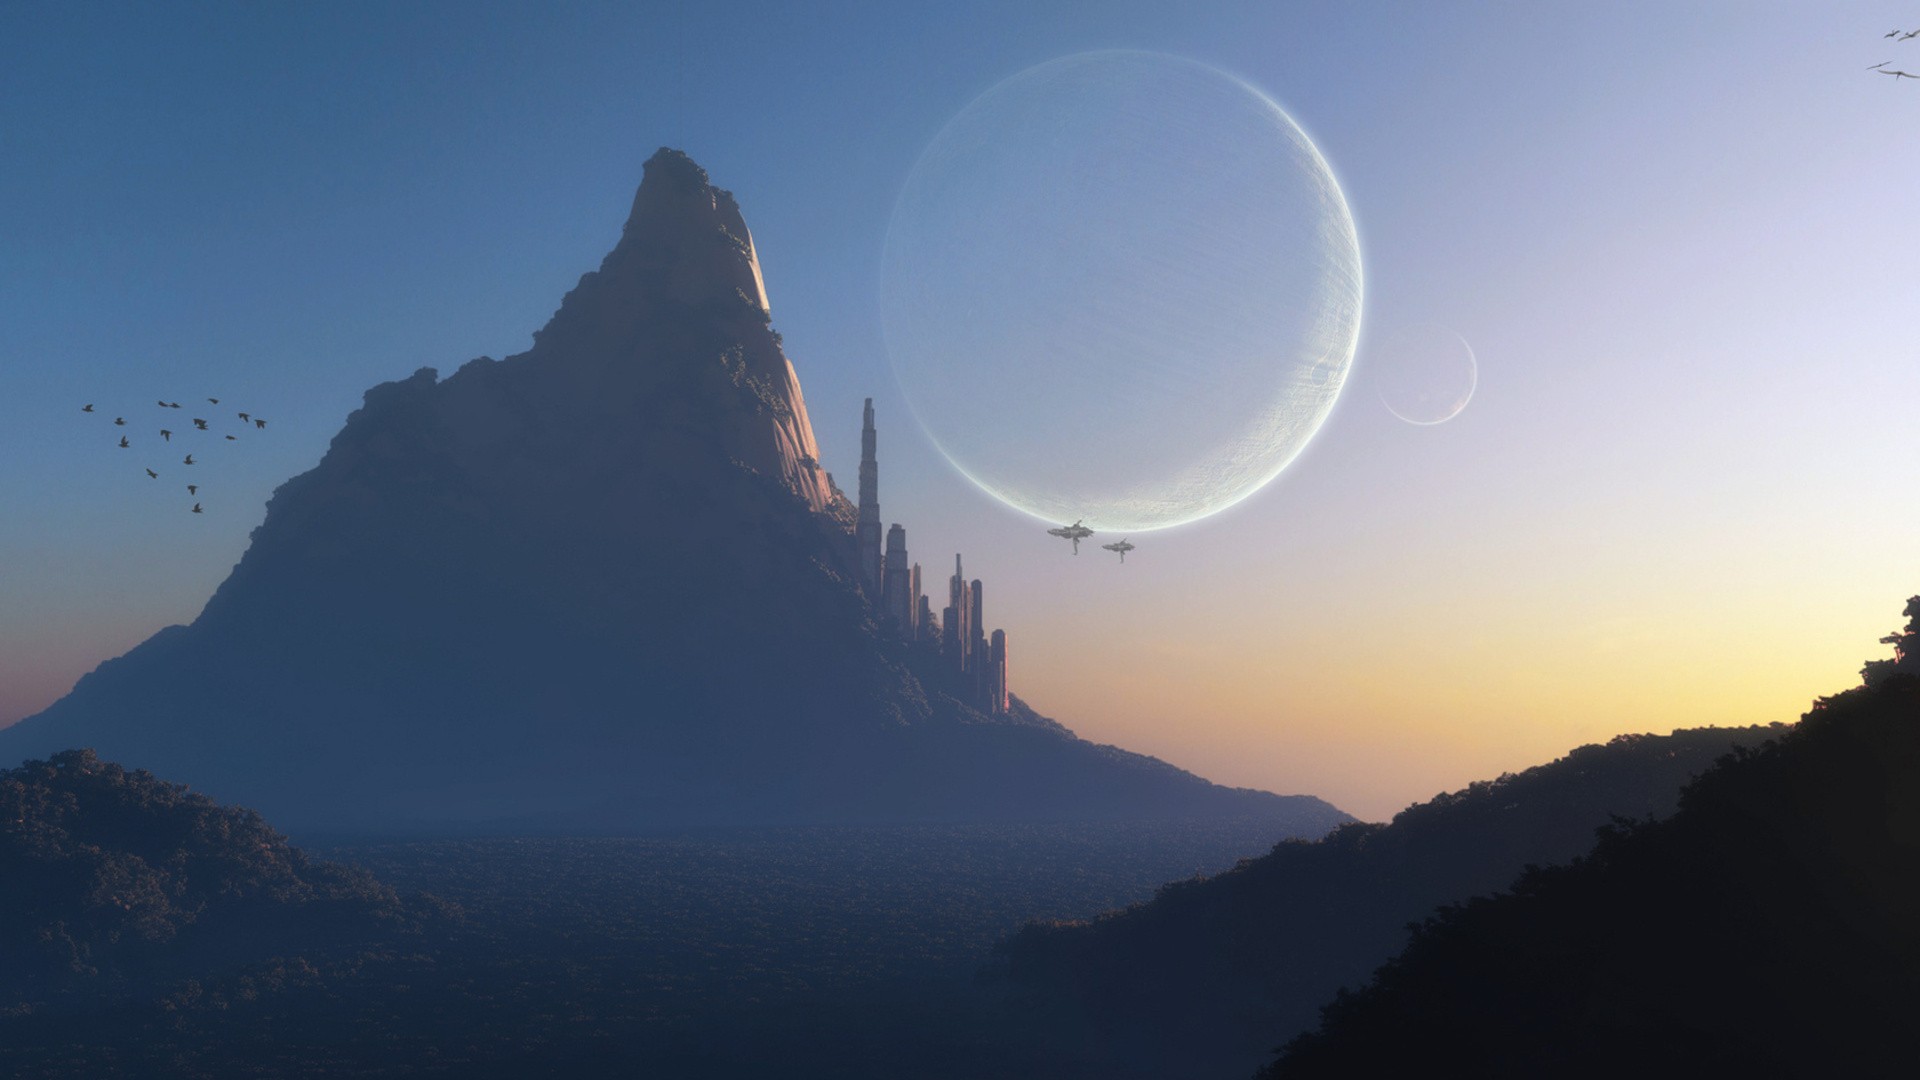 General 1920x1080 planet science fiction digital art mountains sky landscape